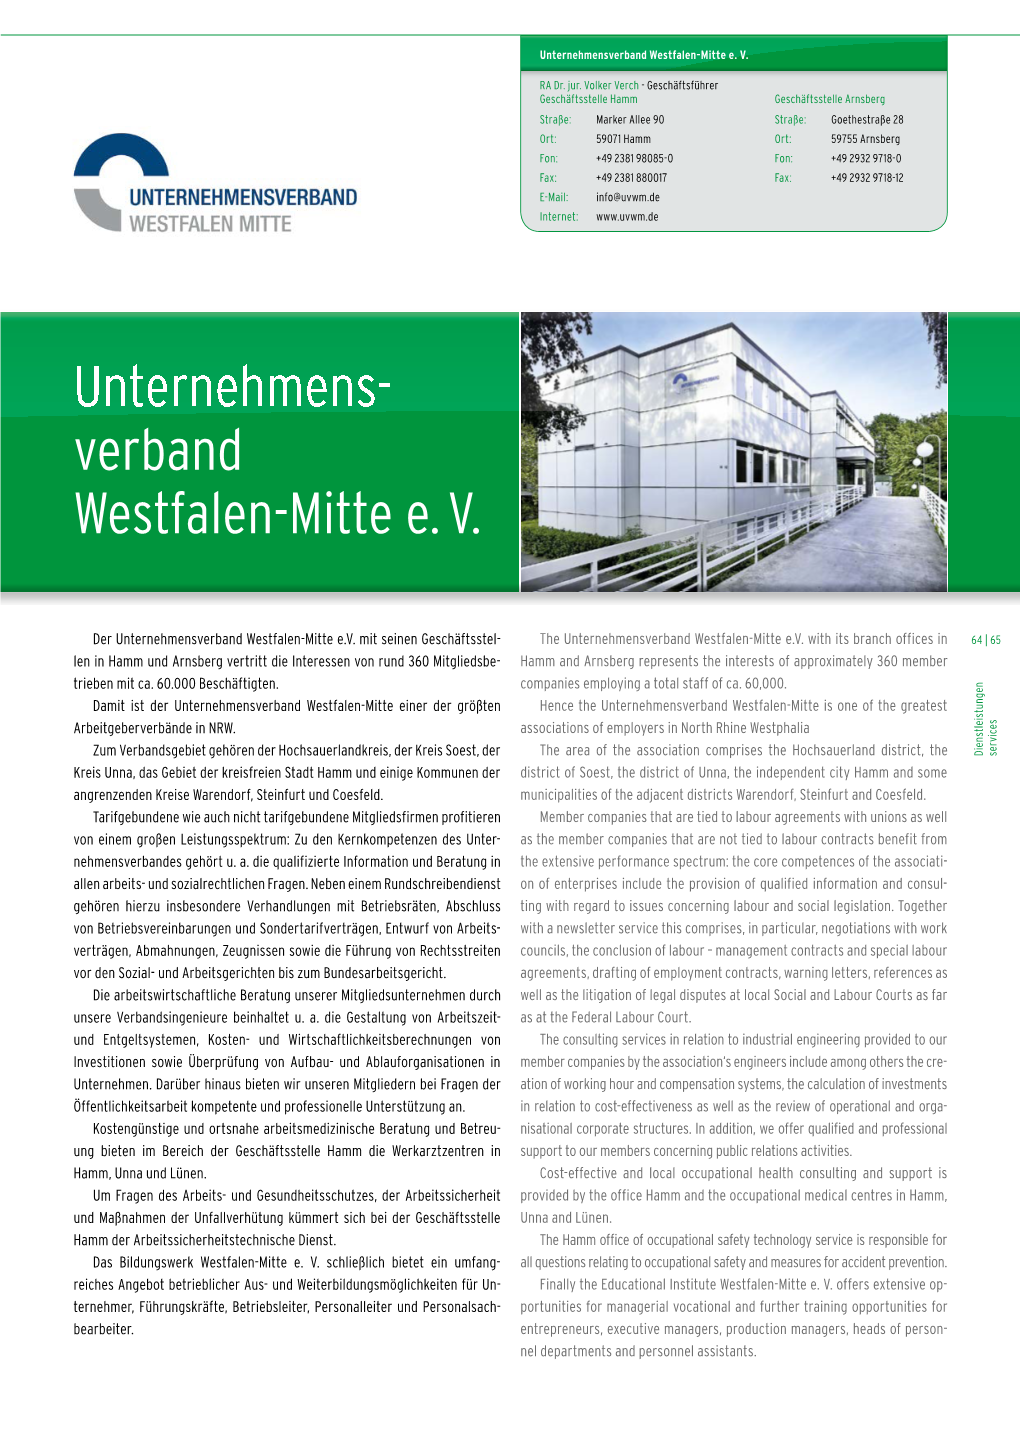 Unternehmens- Verband Westfalen-Mitte E. V